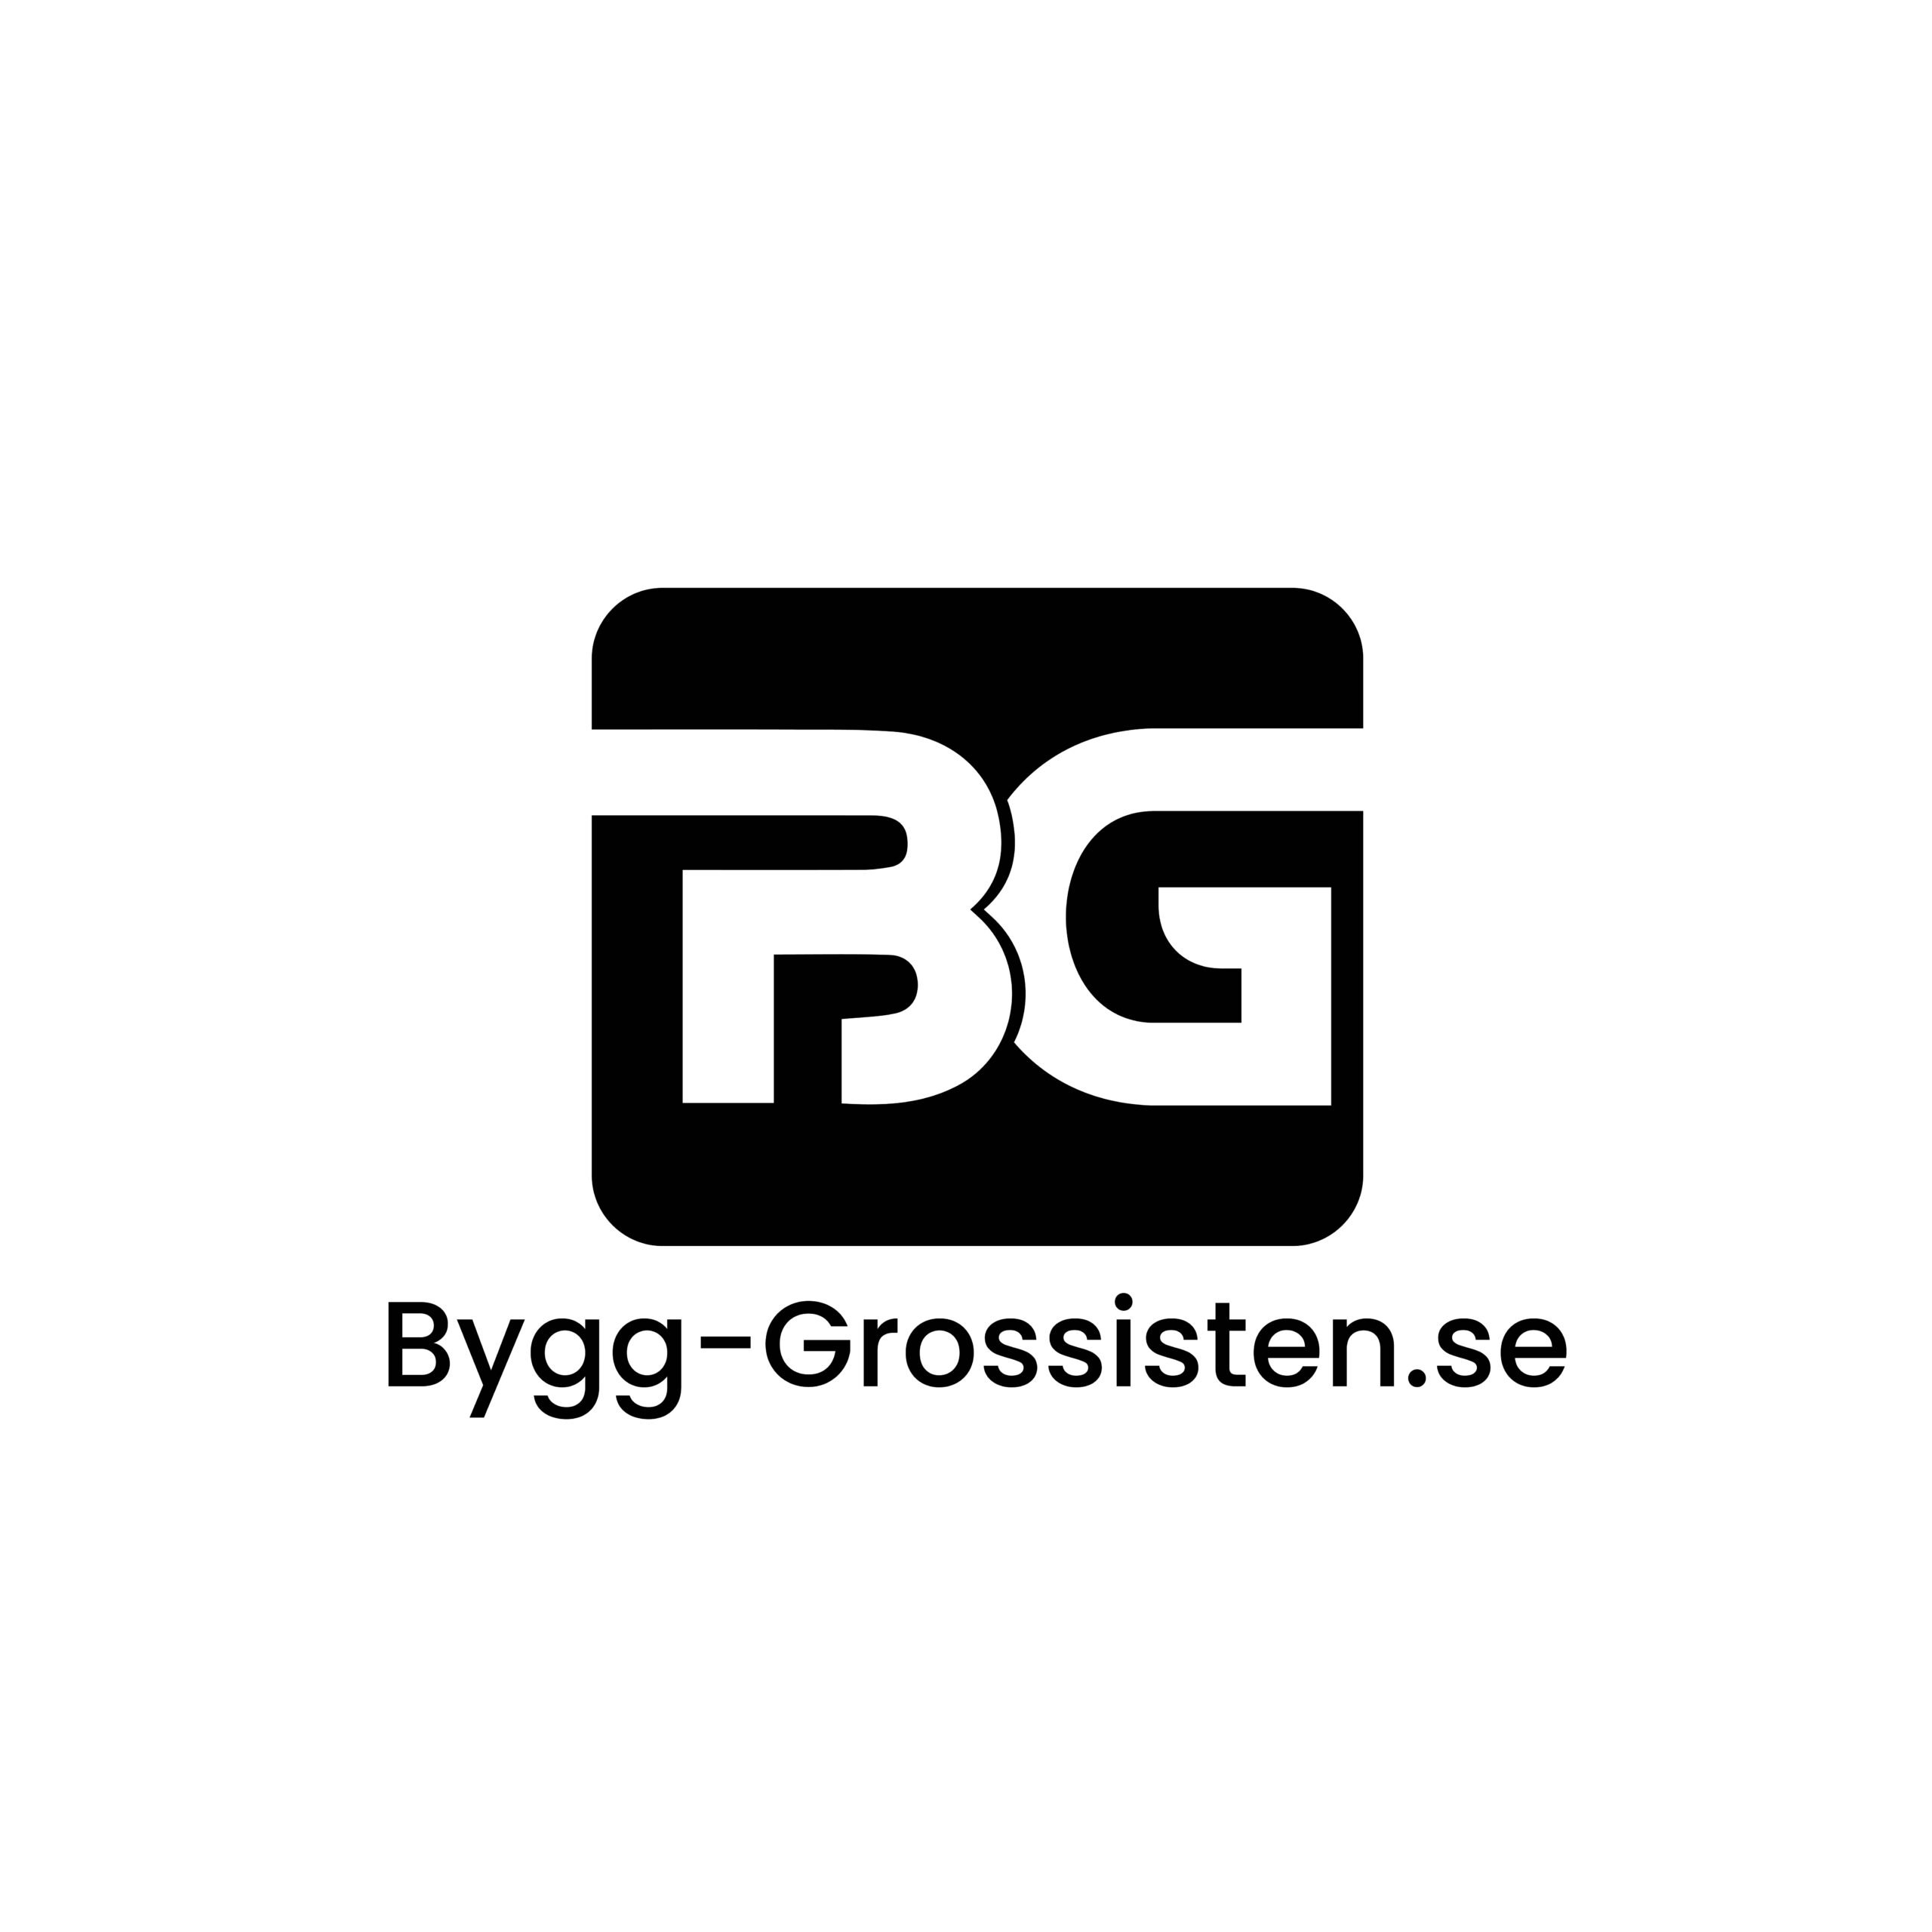 Bygg-Grossisten.se